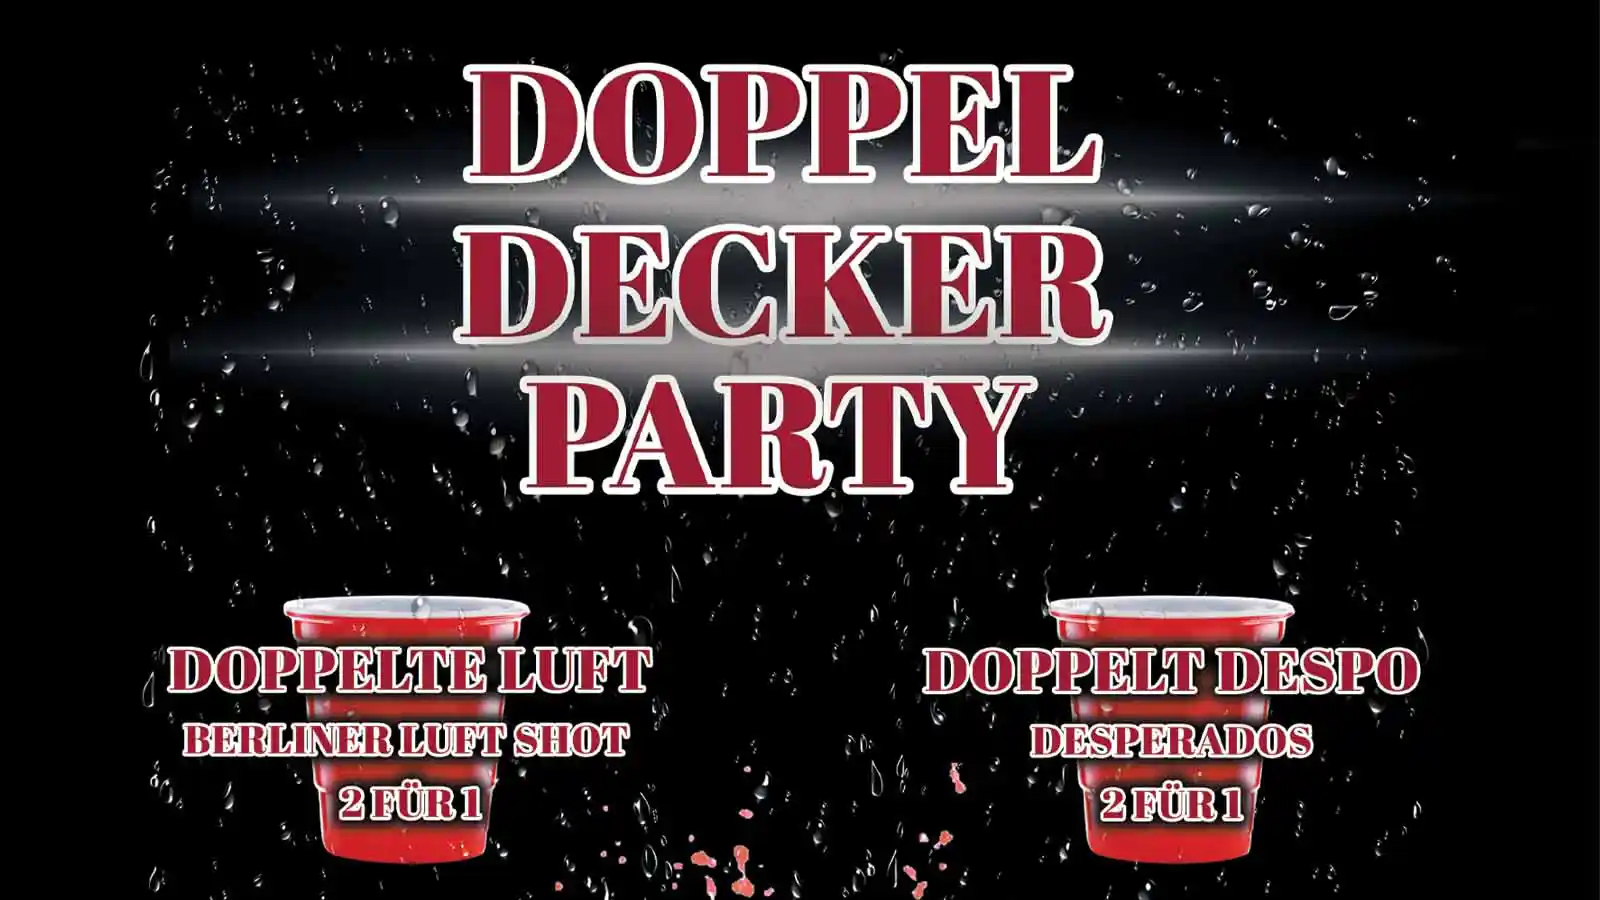 Doppel Decker Party Schaukelkeller